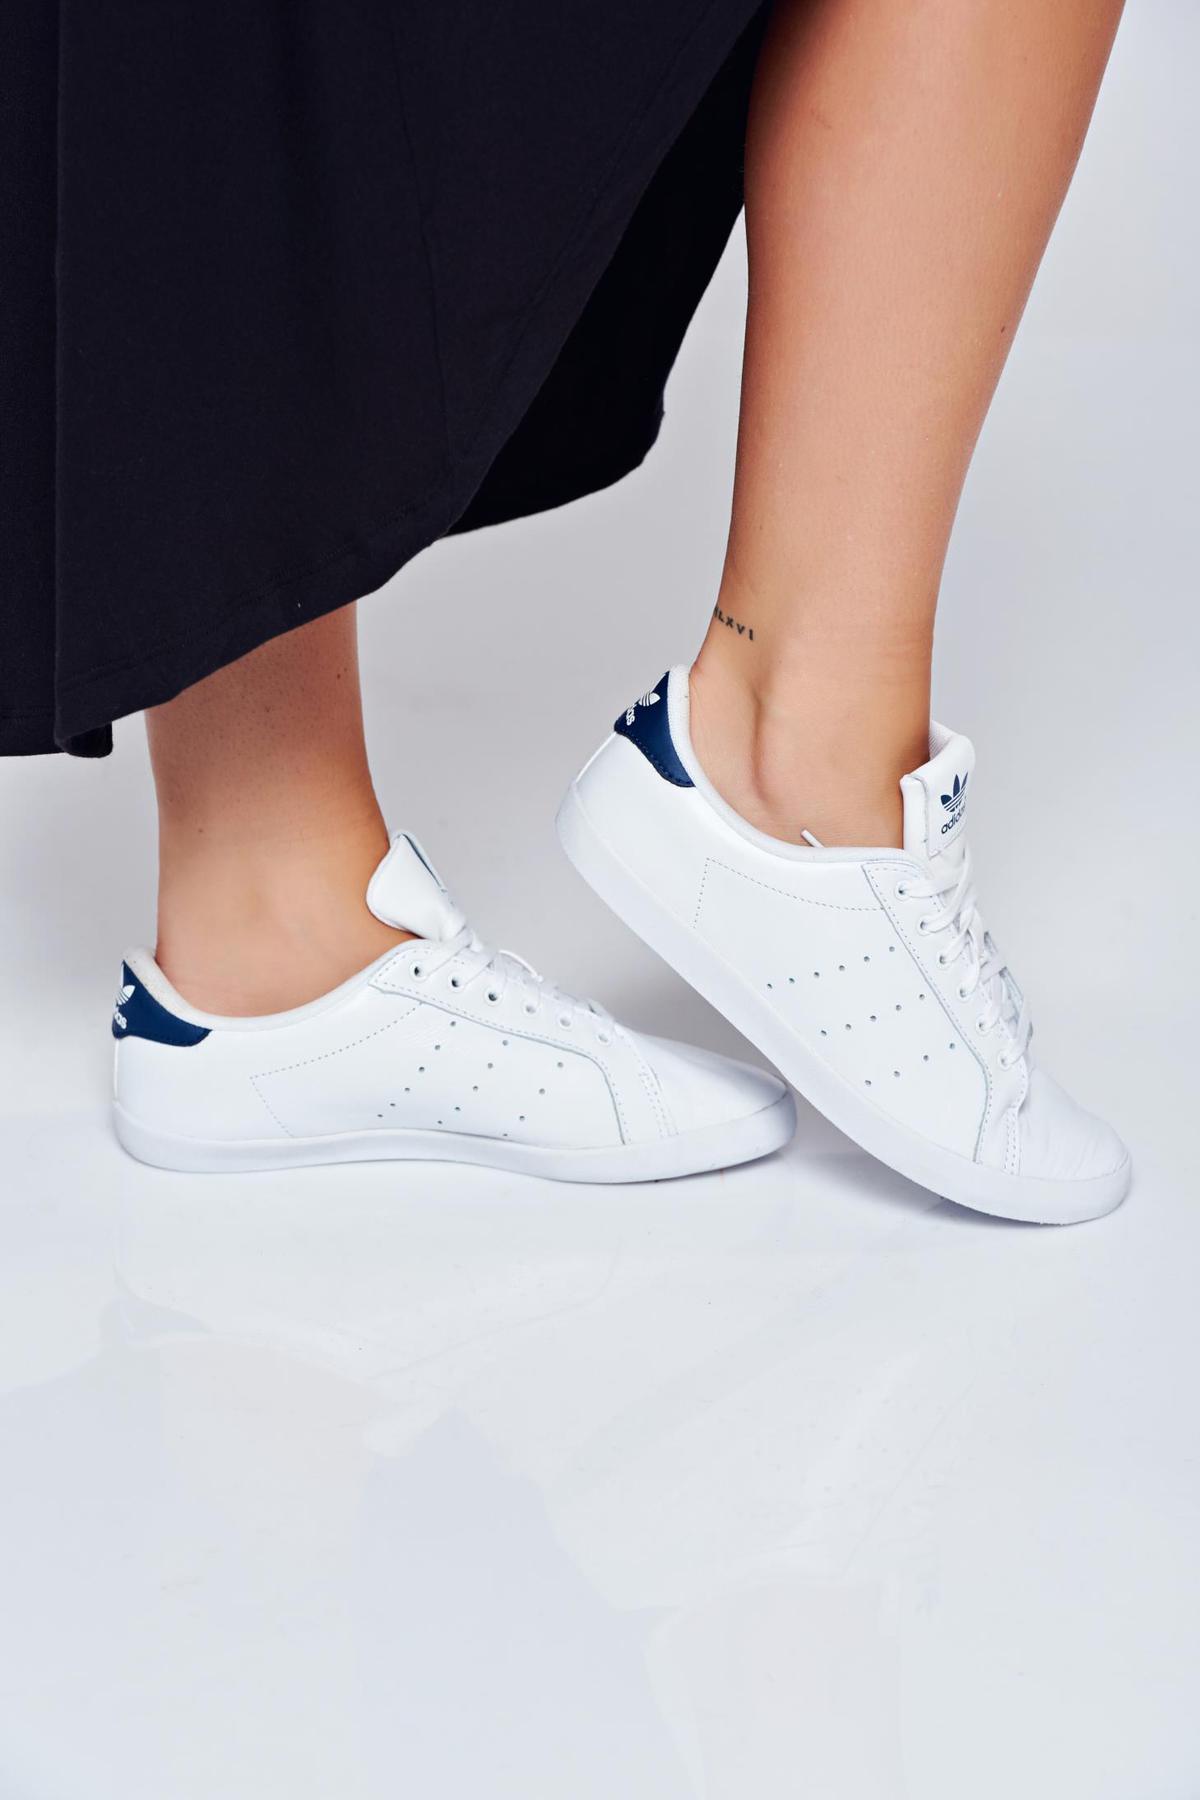 Pantofi sport Adidas Originals Stan Smith albi casual cu talpa usoara